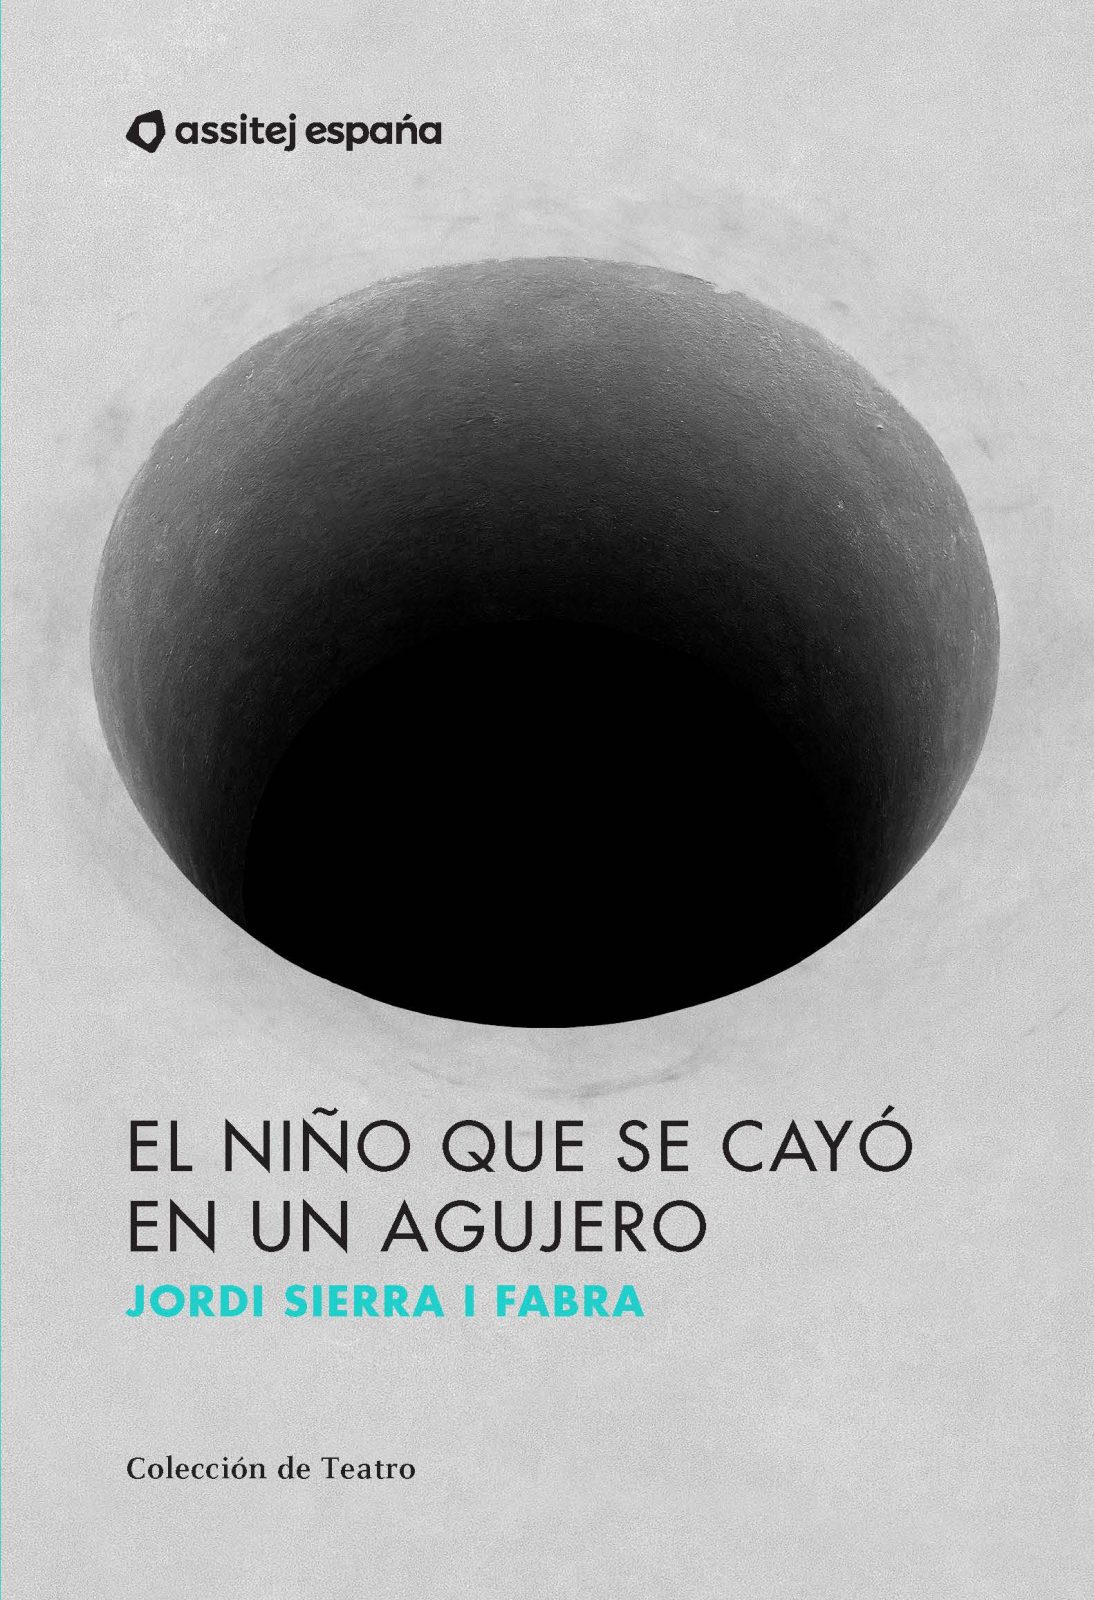 The boy who fell into a hole, by Jordi SIerra i Fabra